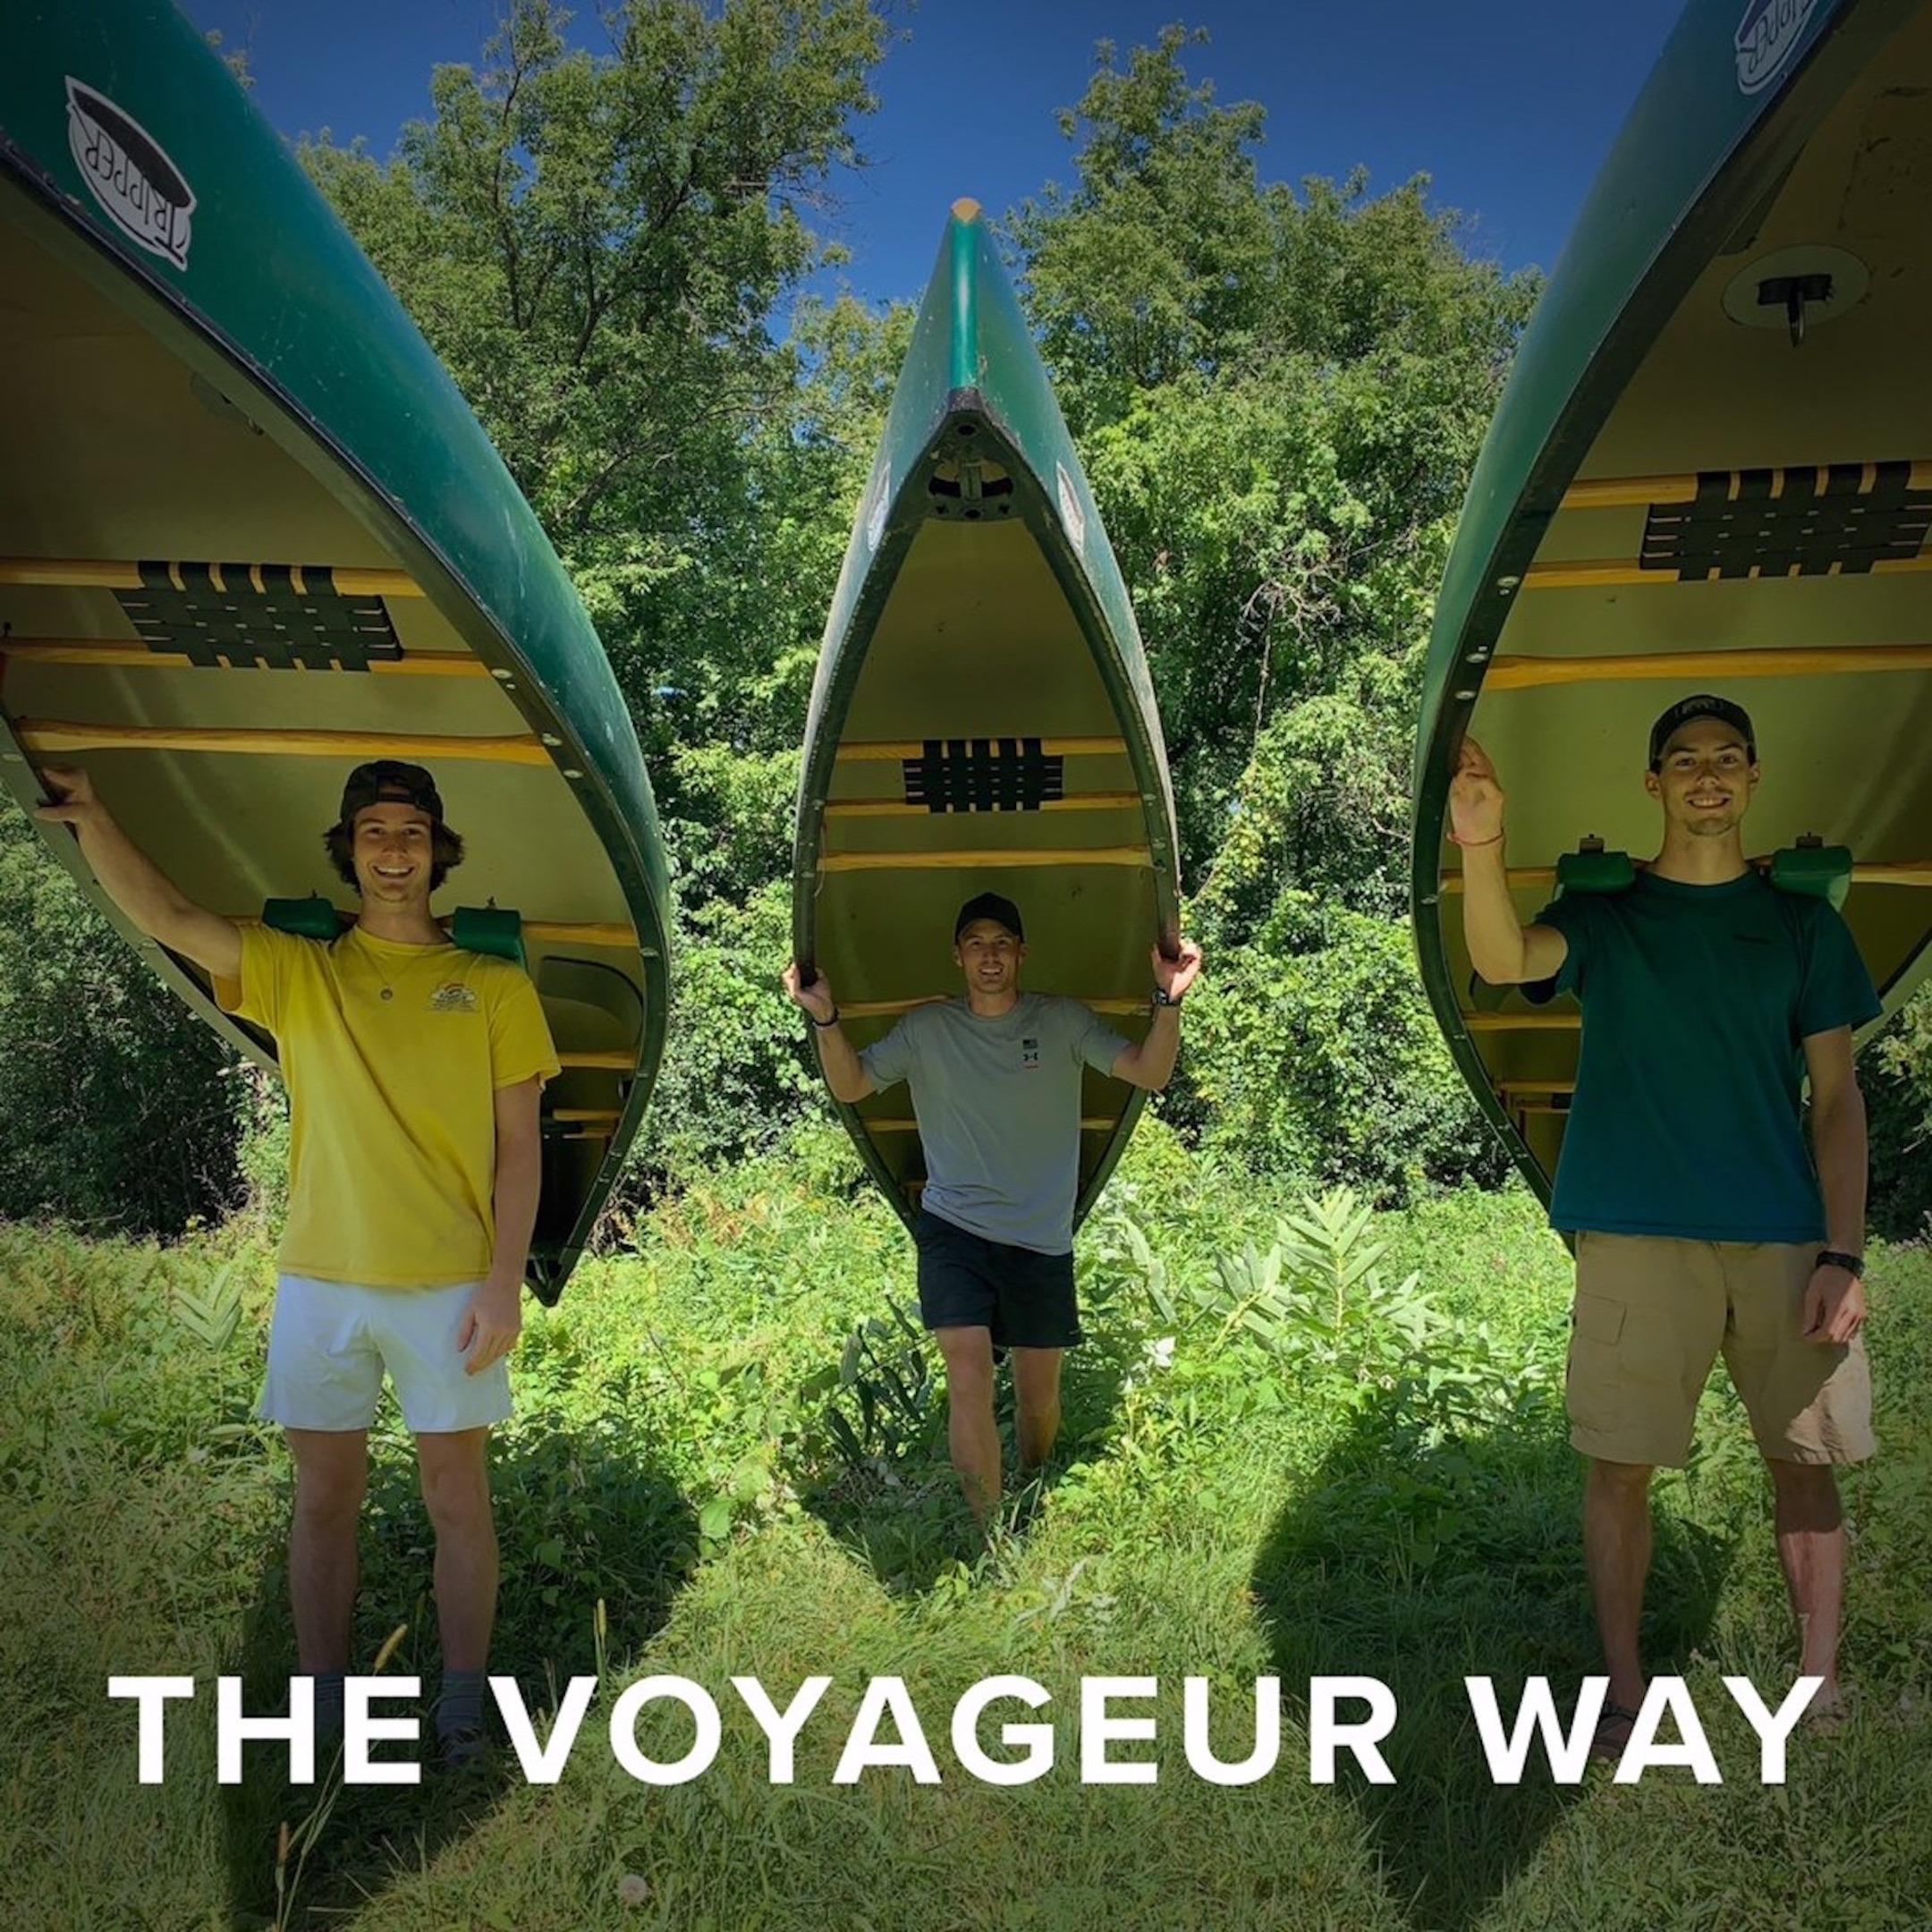 The Voyageur Way